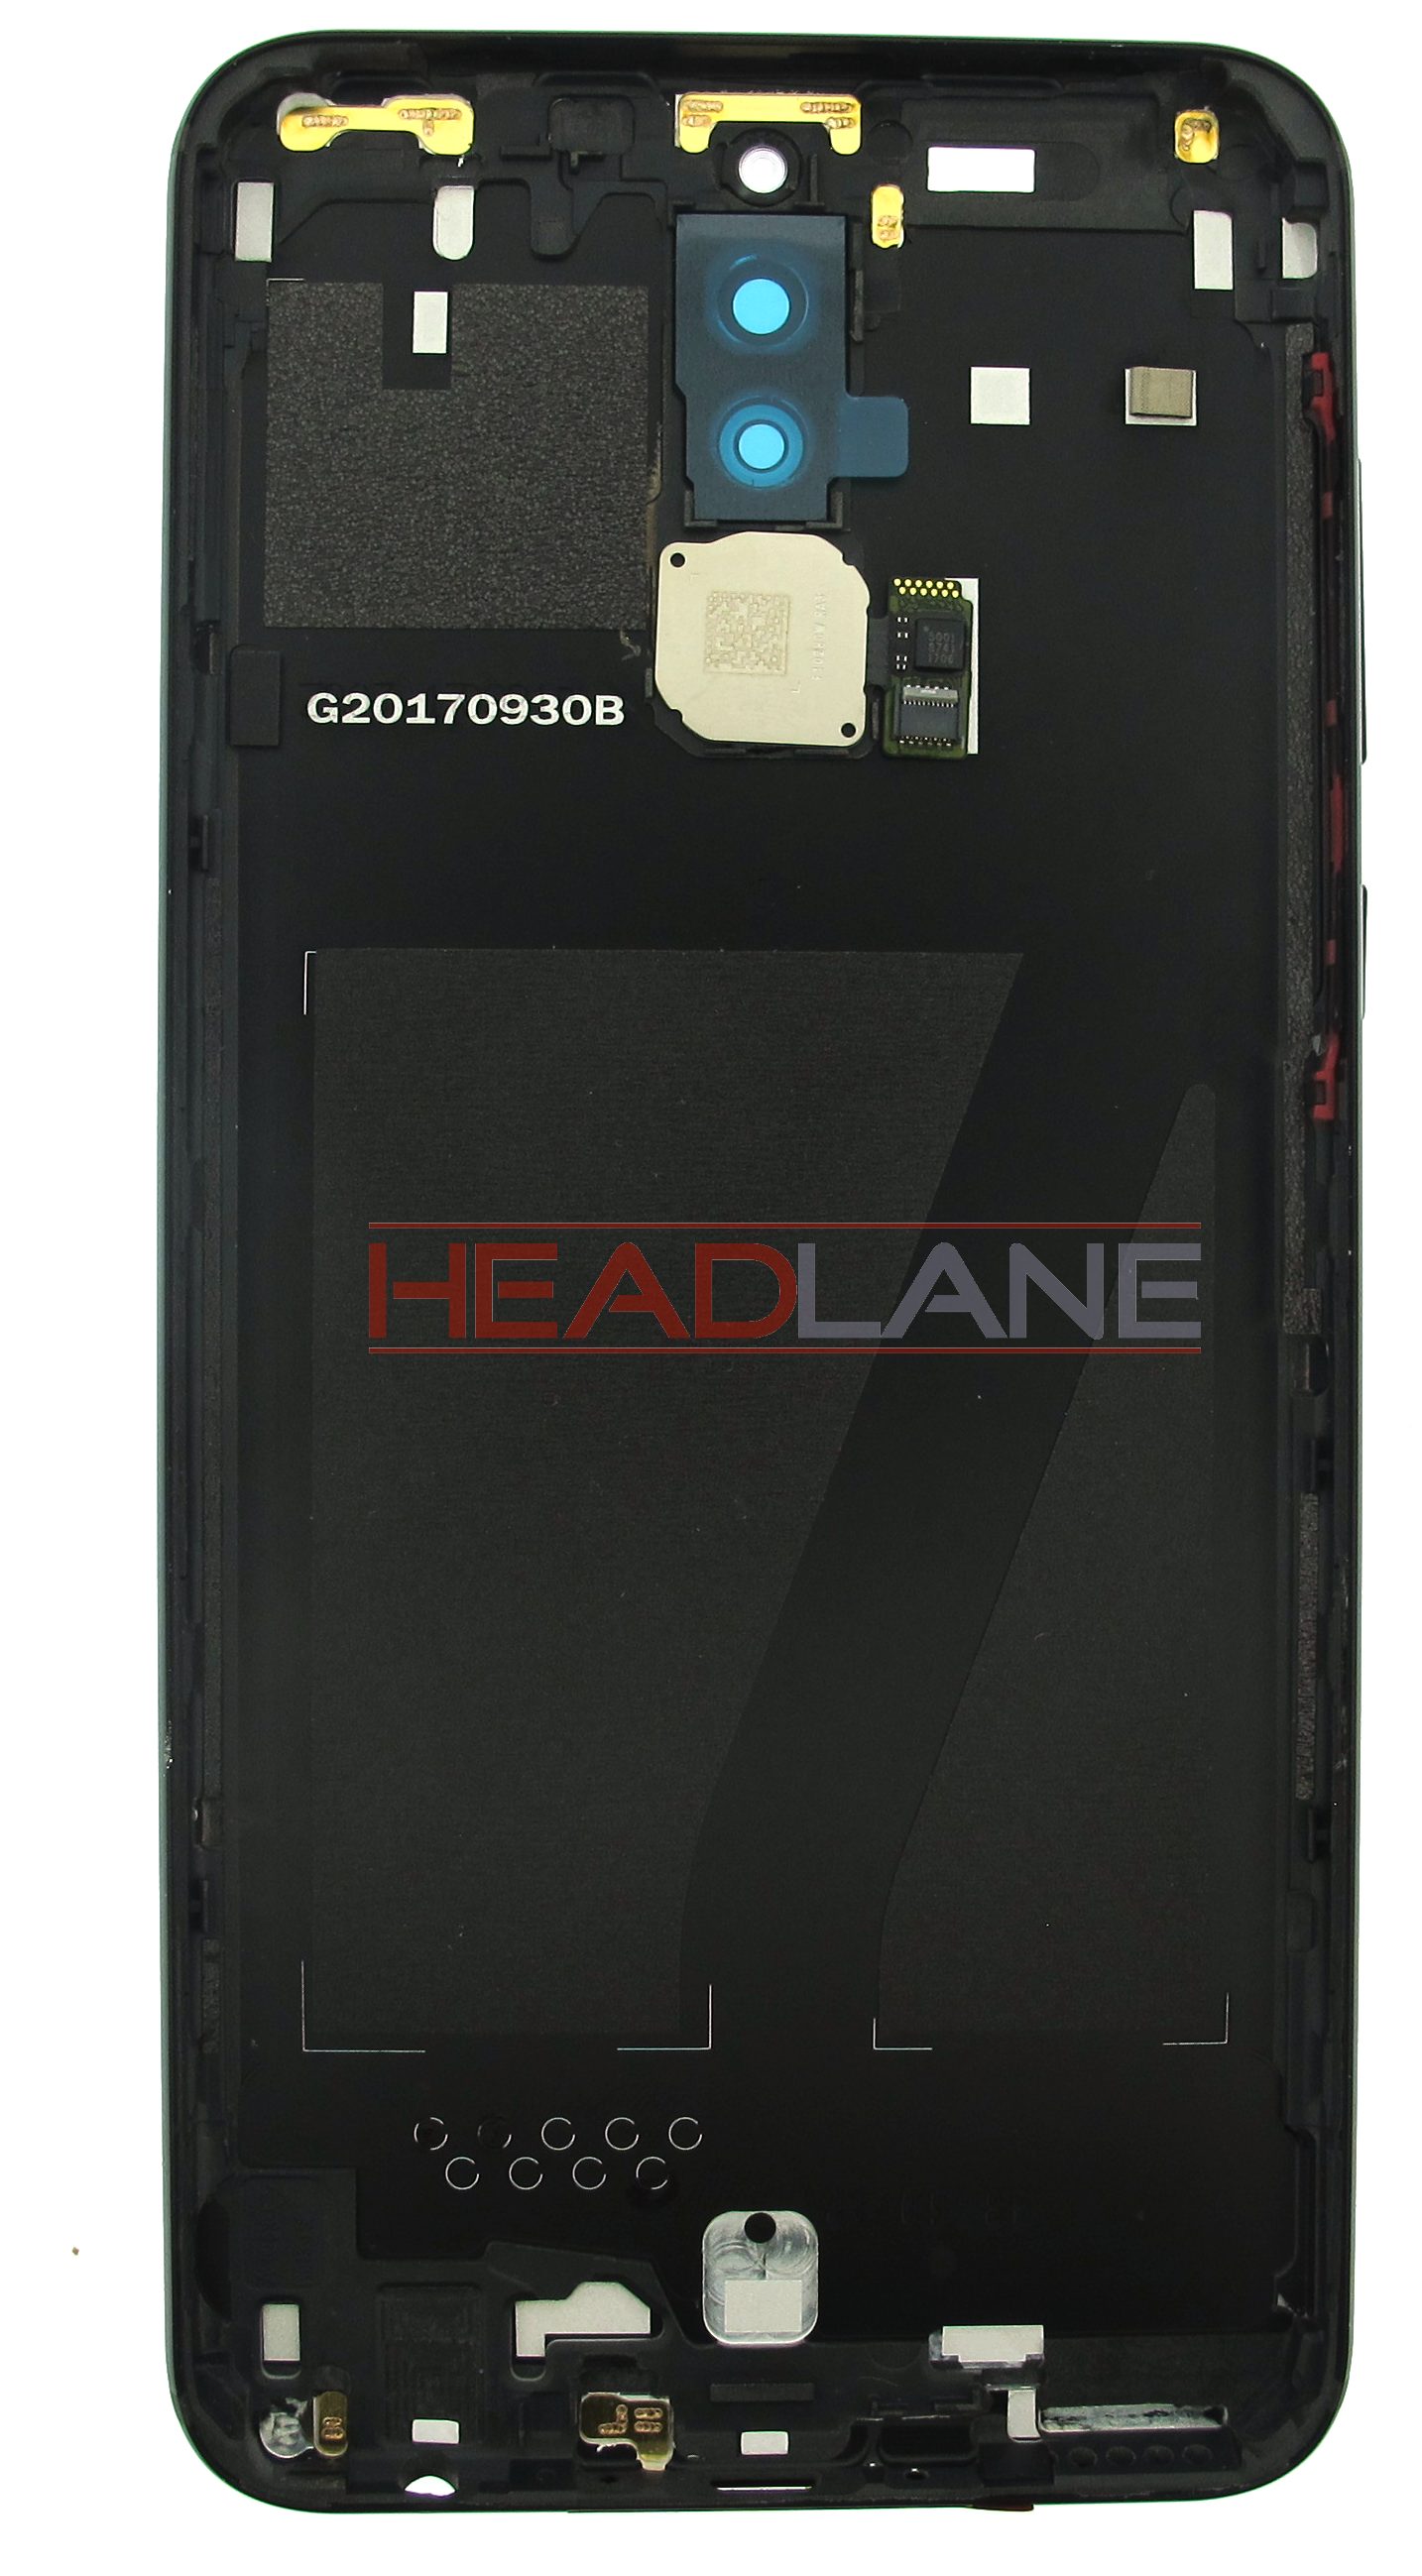 Huawei Mate 10 Lite Battery Cover - Black